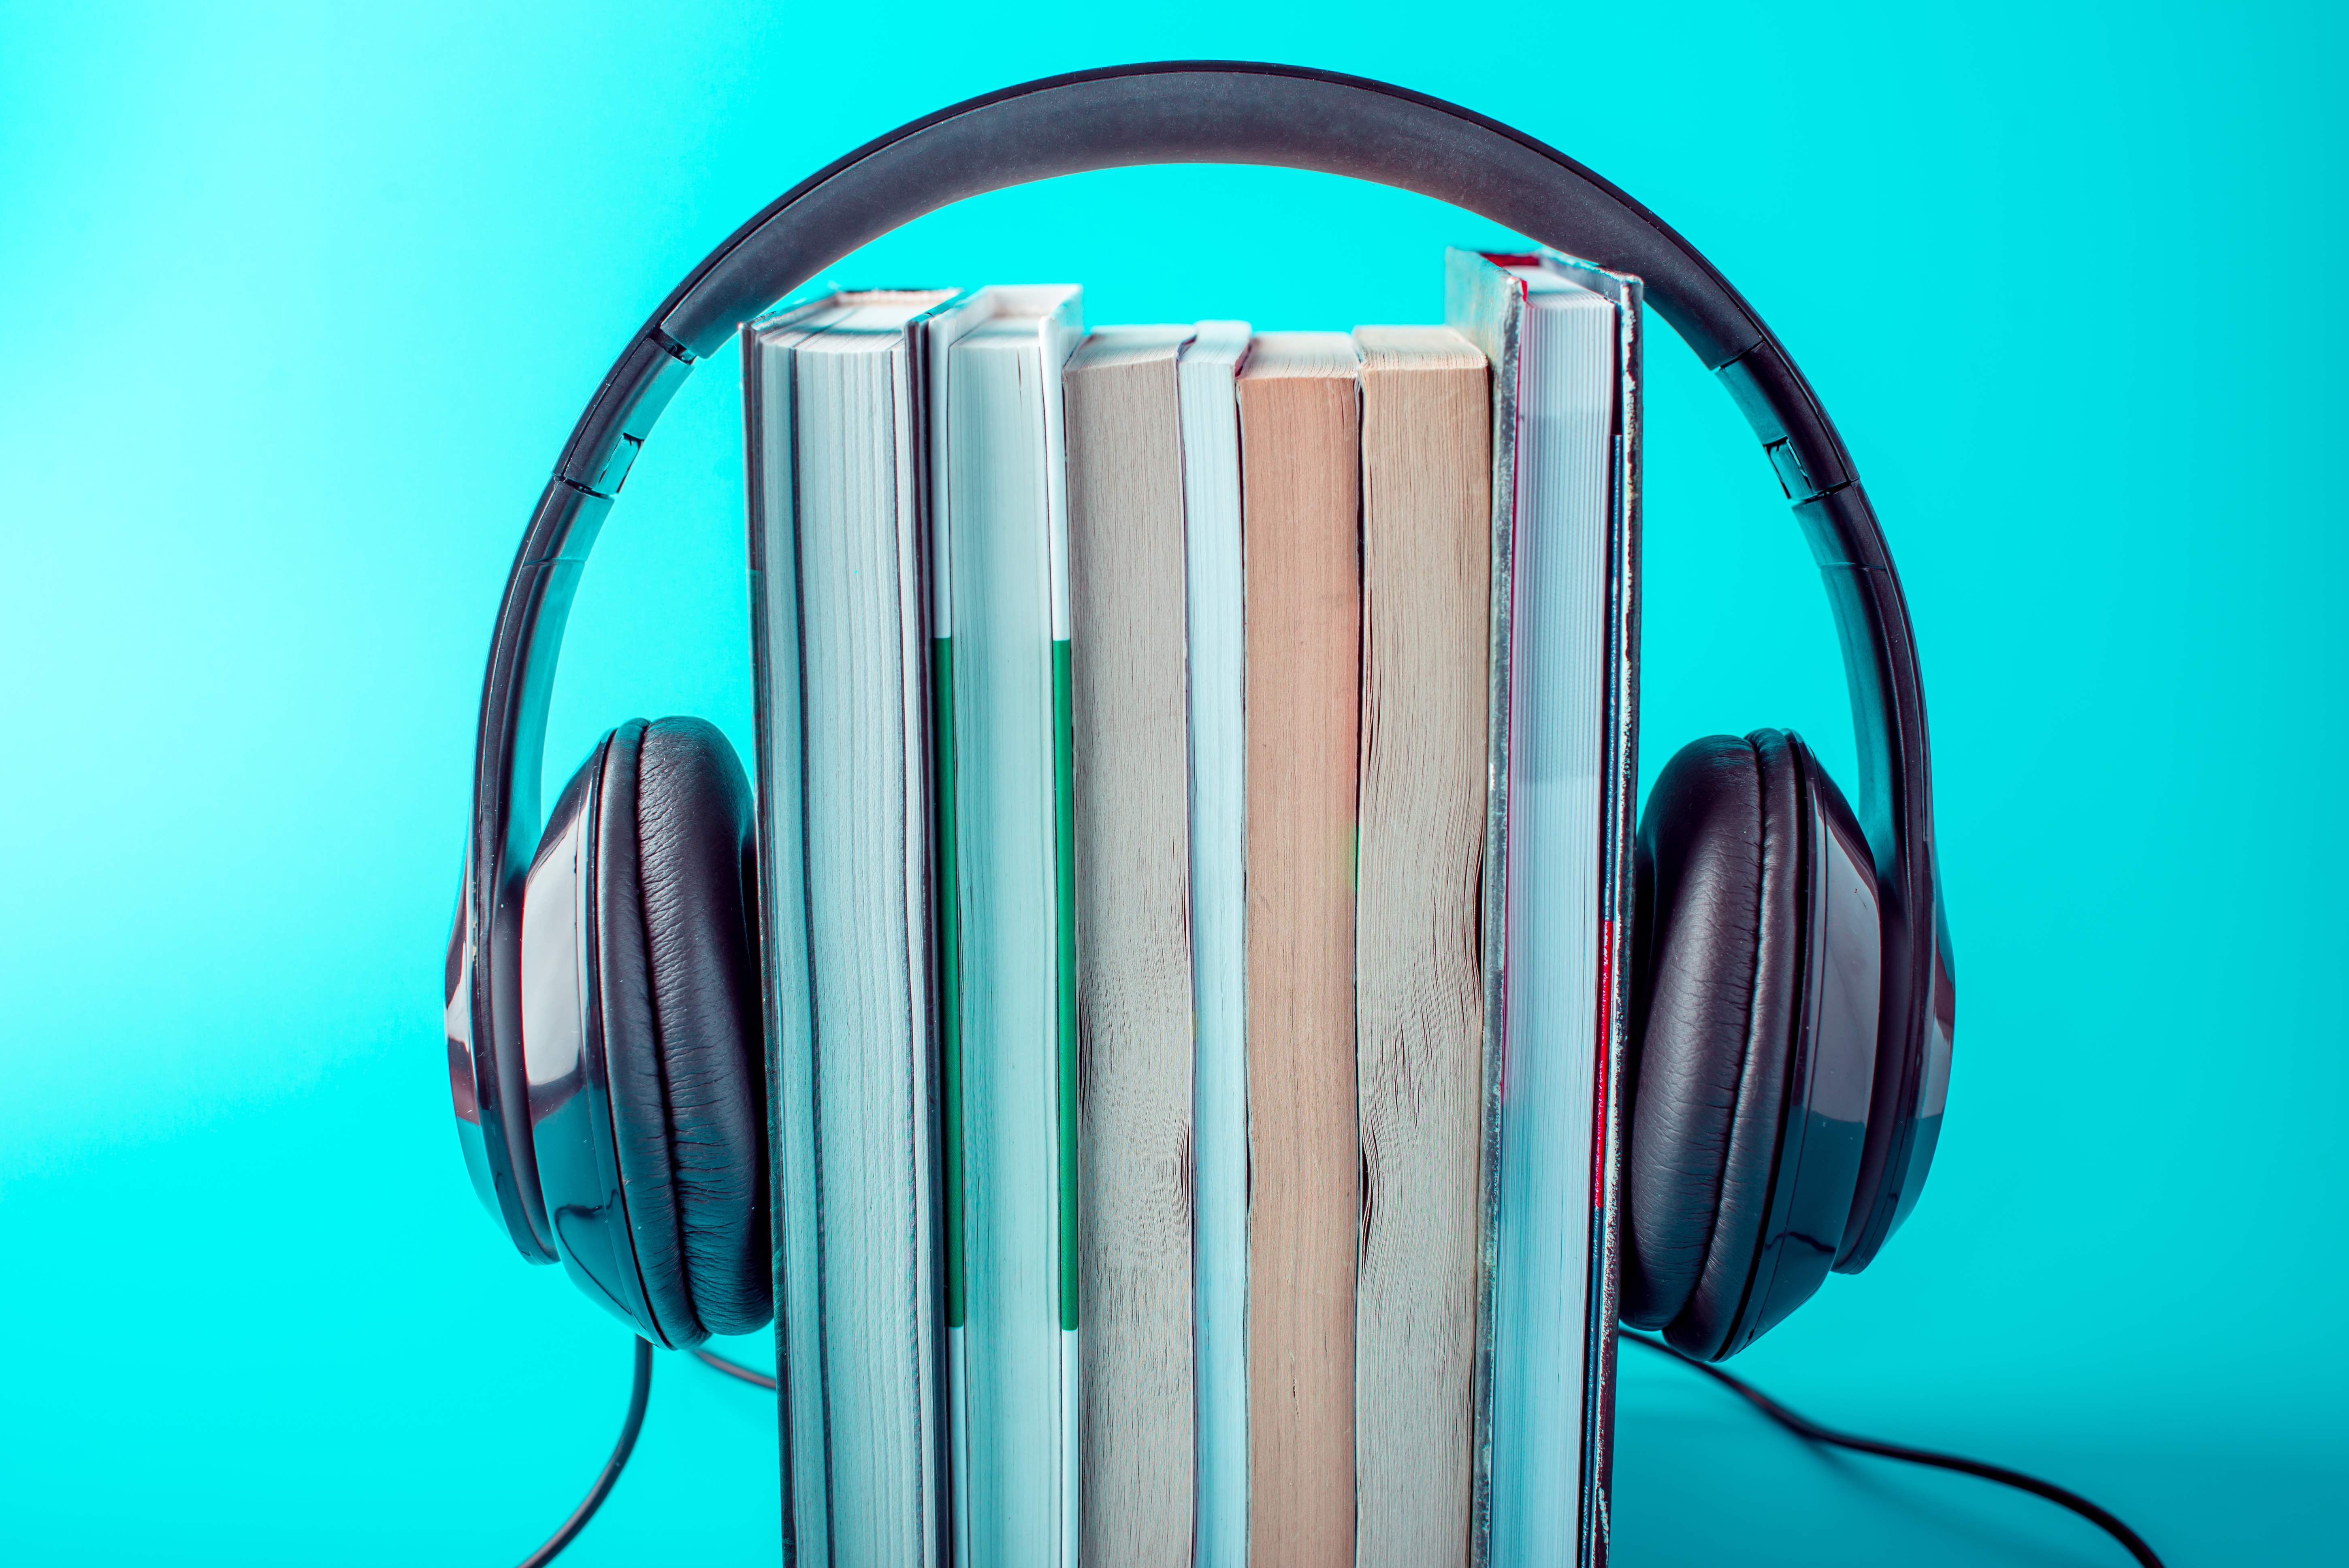 Is audiobooks any good?